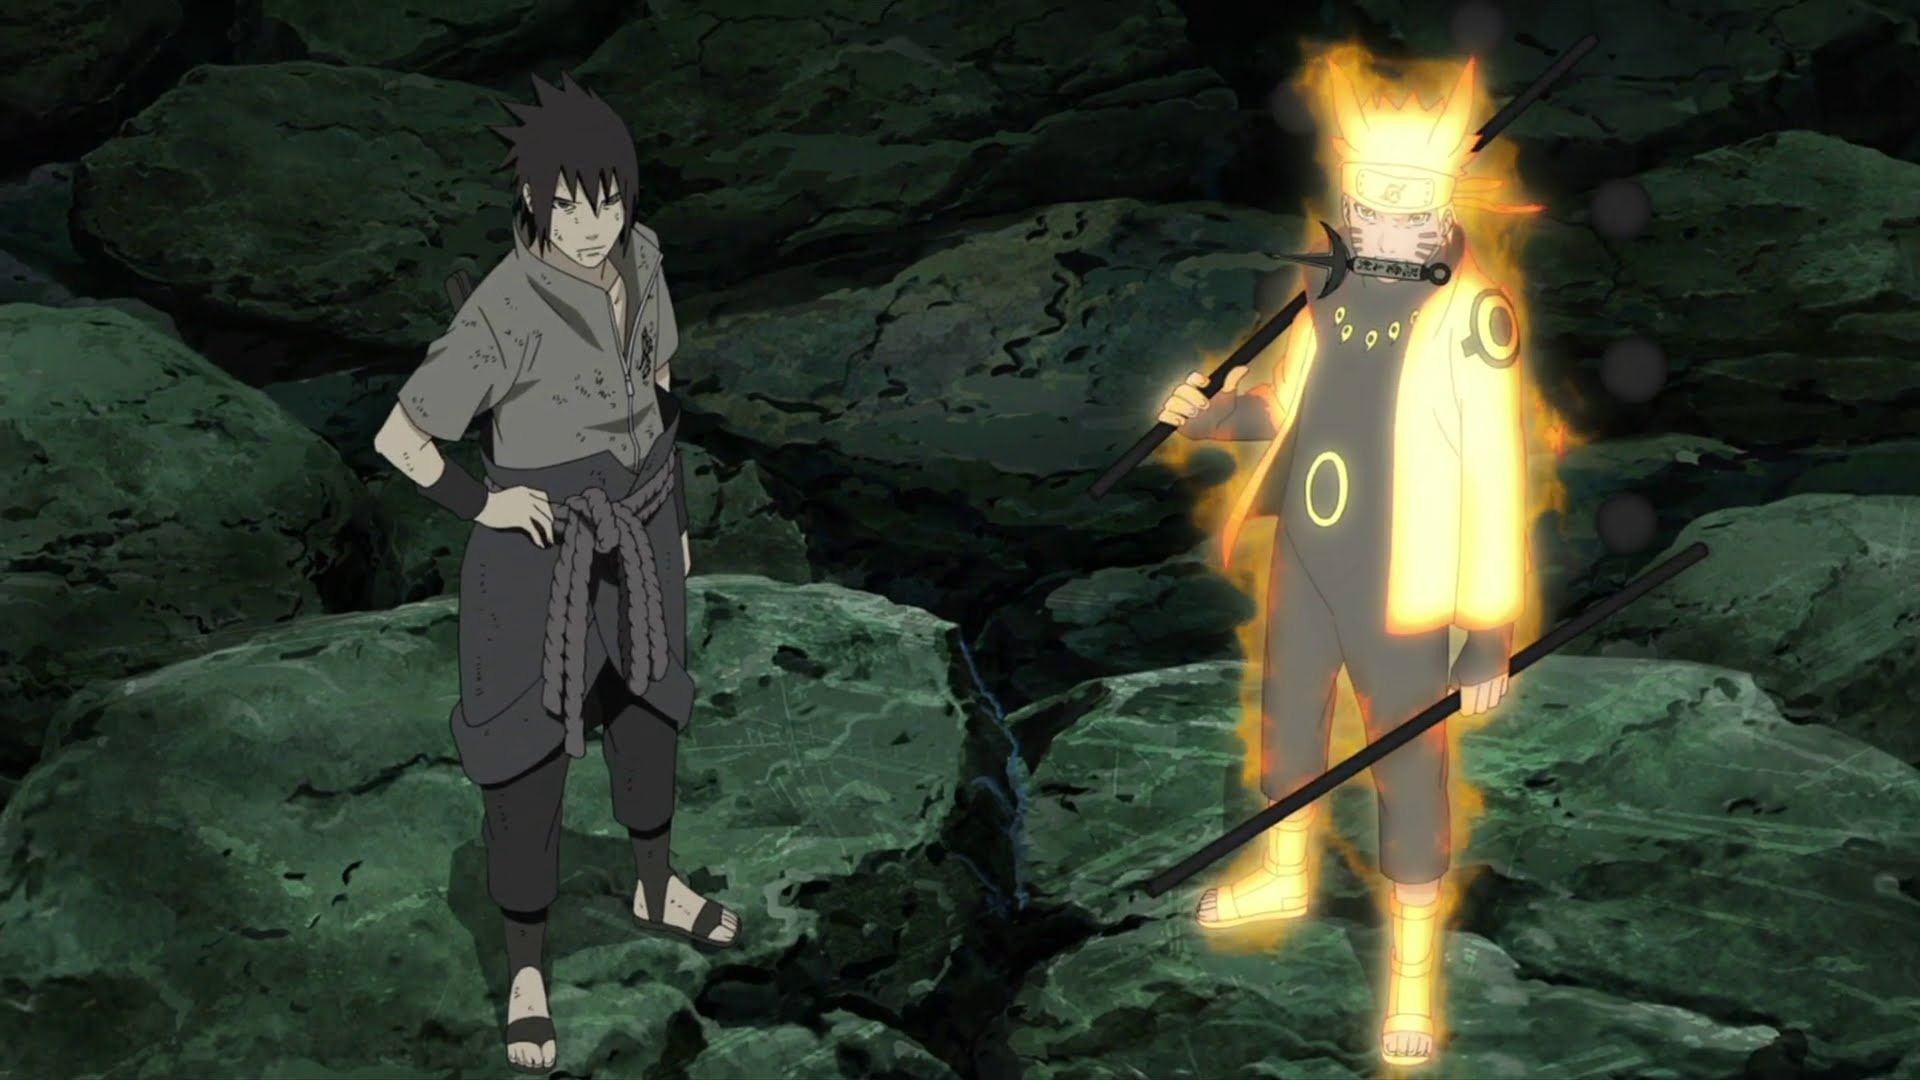 Naruto and Sasuke (Teen) VS Naruto and Sasuke (Adults)